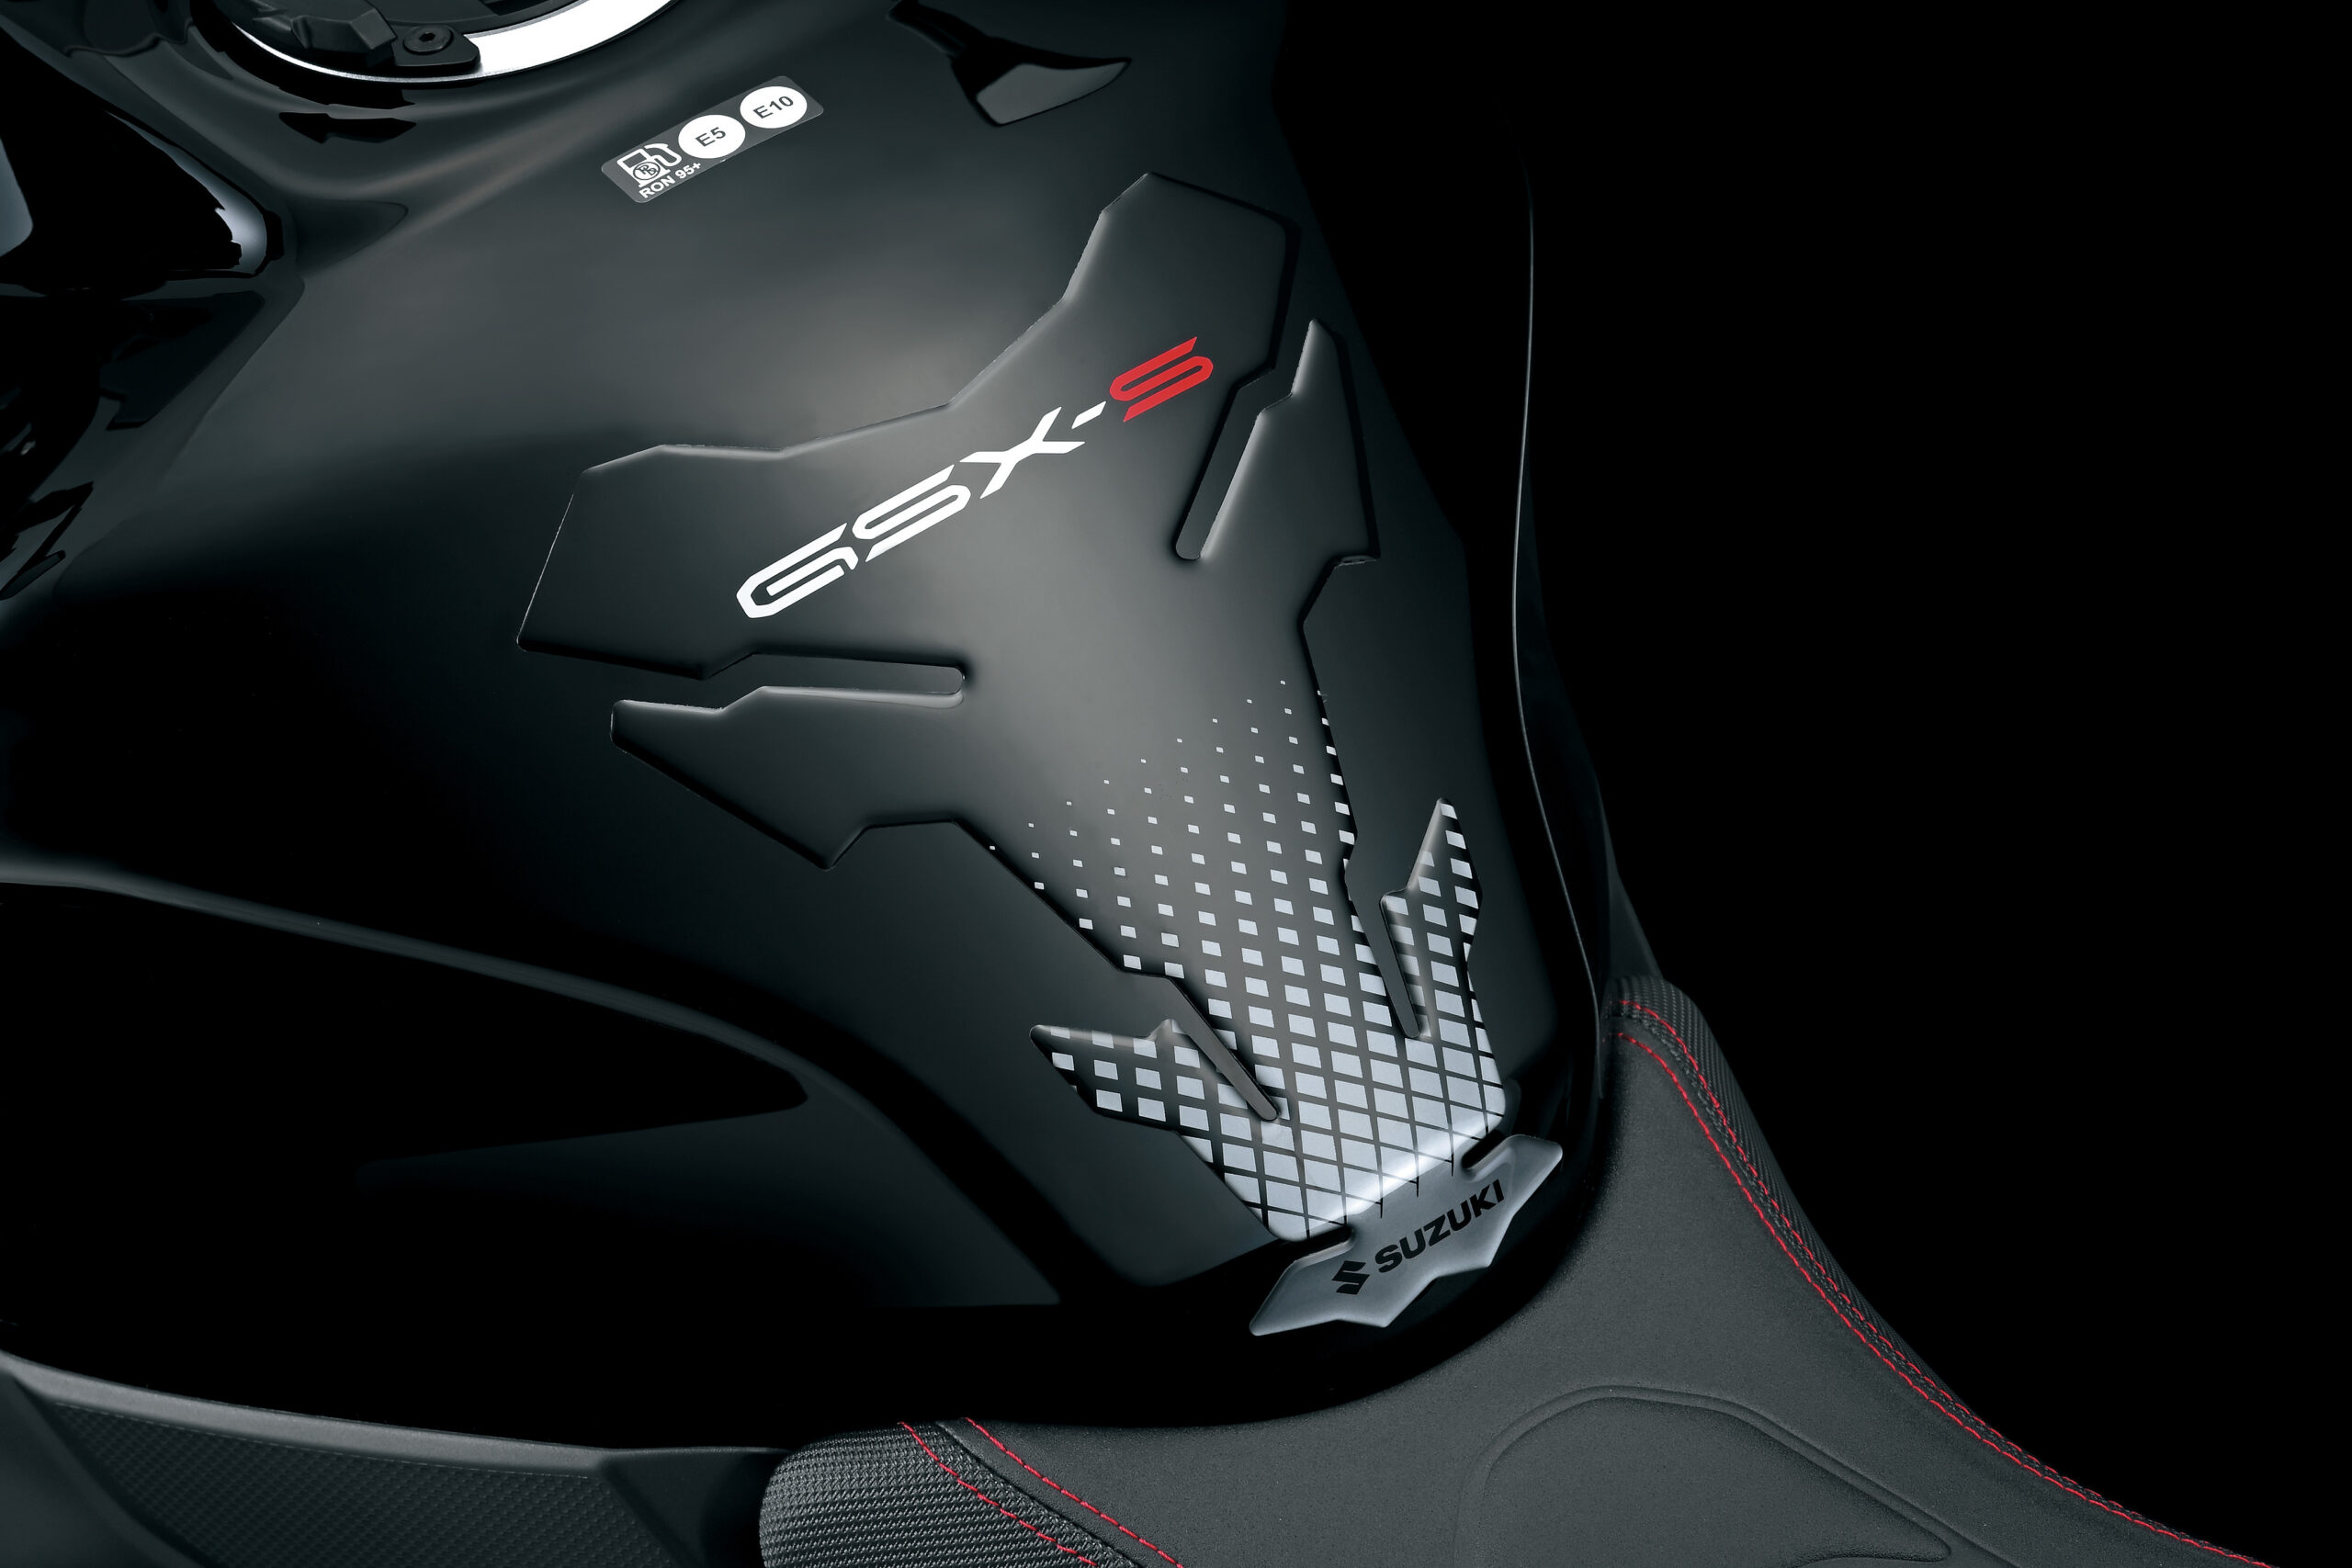 GSX SGX M accessories fuel tank pad gsx s logo black